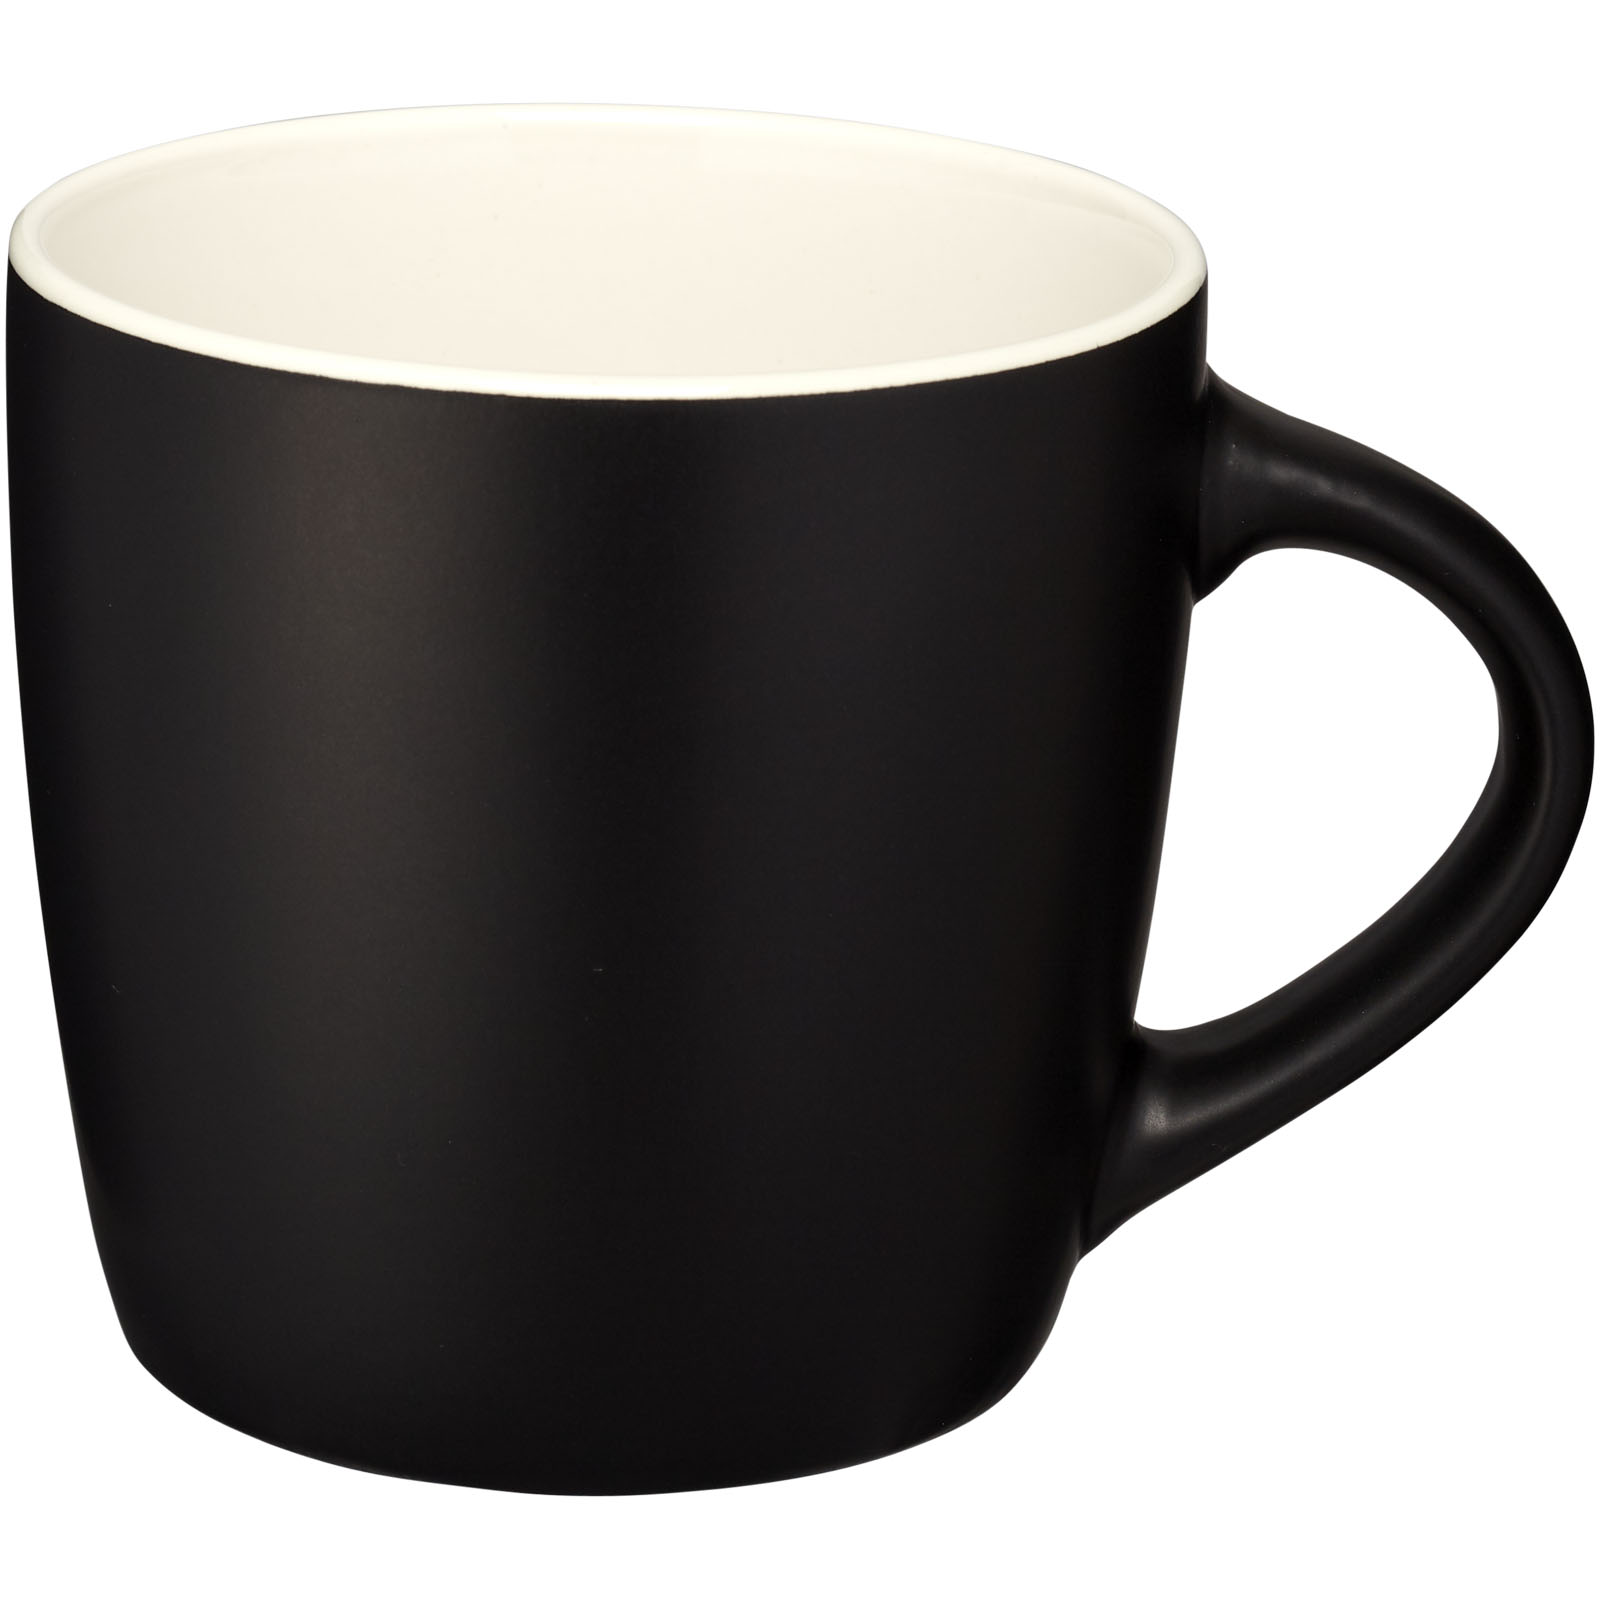 Advertising Standard mugs - Riviera 340 ml ceramic mug